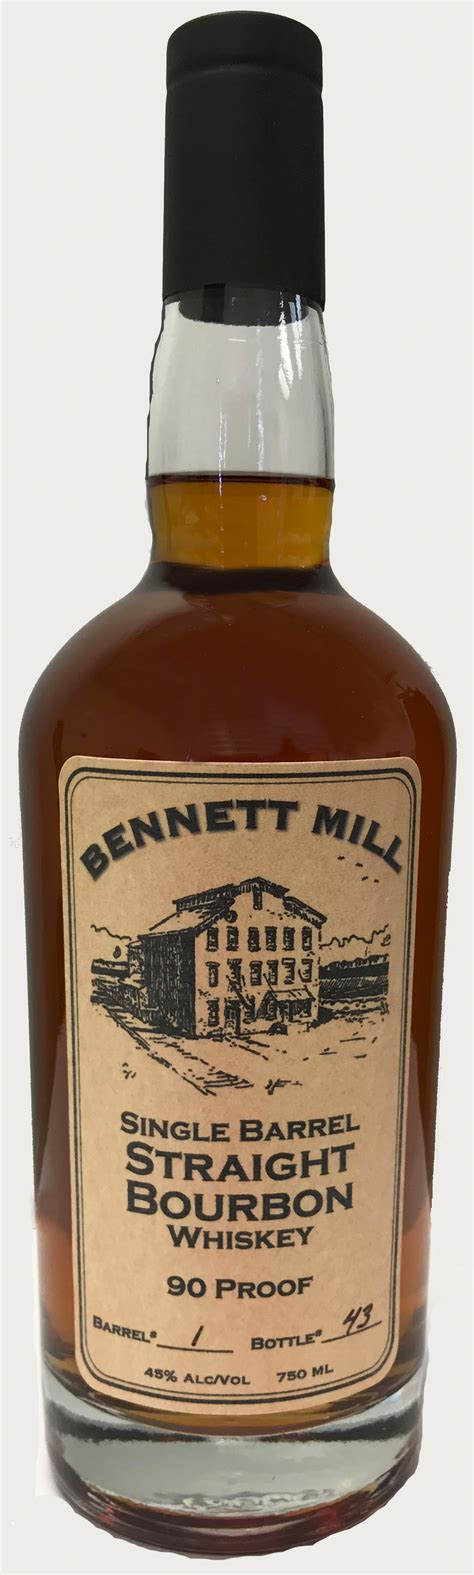 bennett mill single barrel straight bourbon   show  heartland